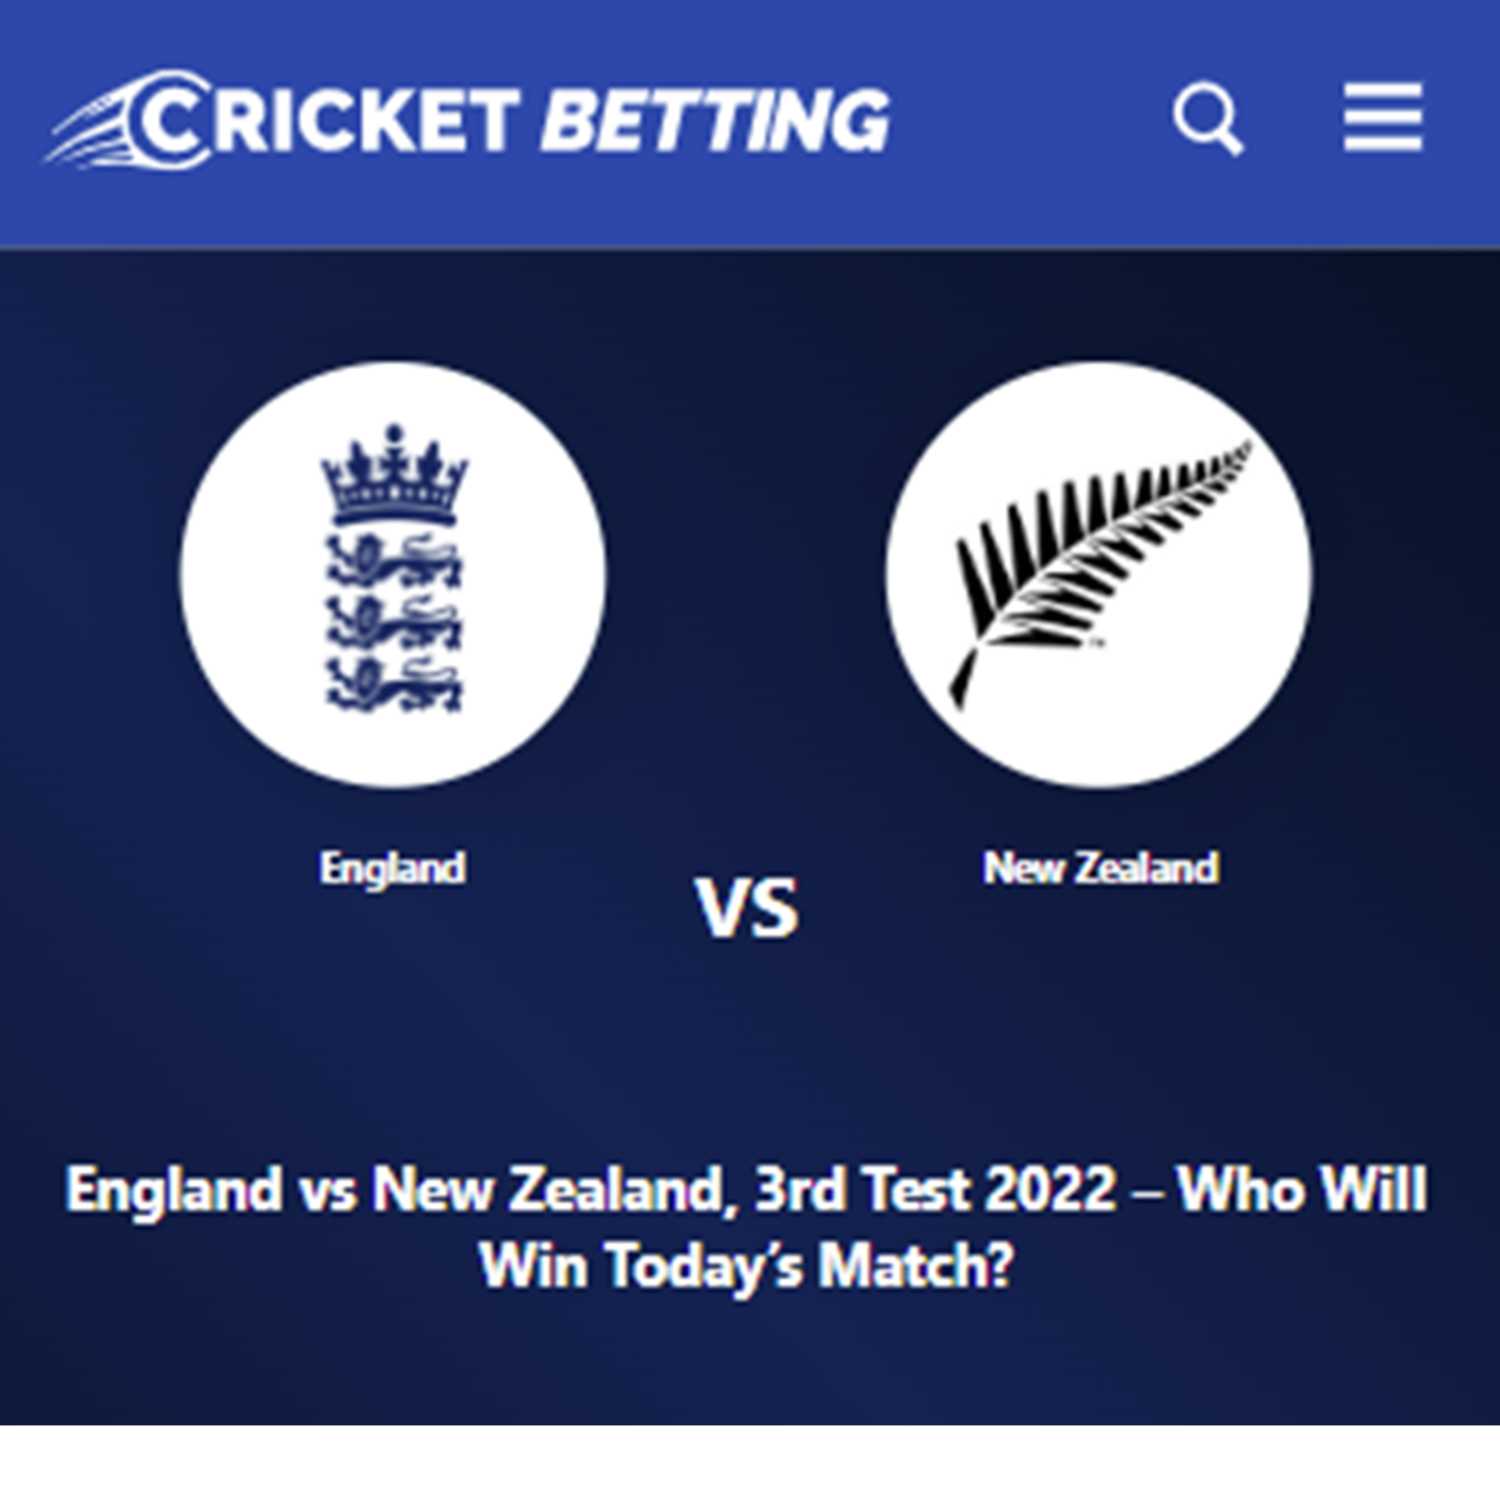 England vs New Zealand, 3rd Test 2022